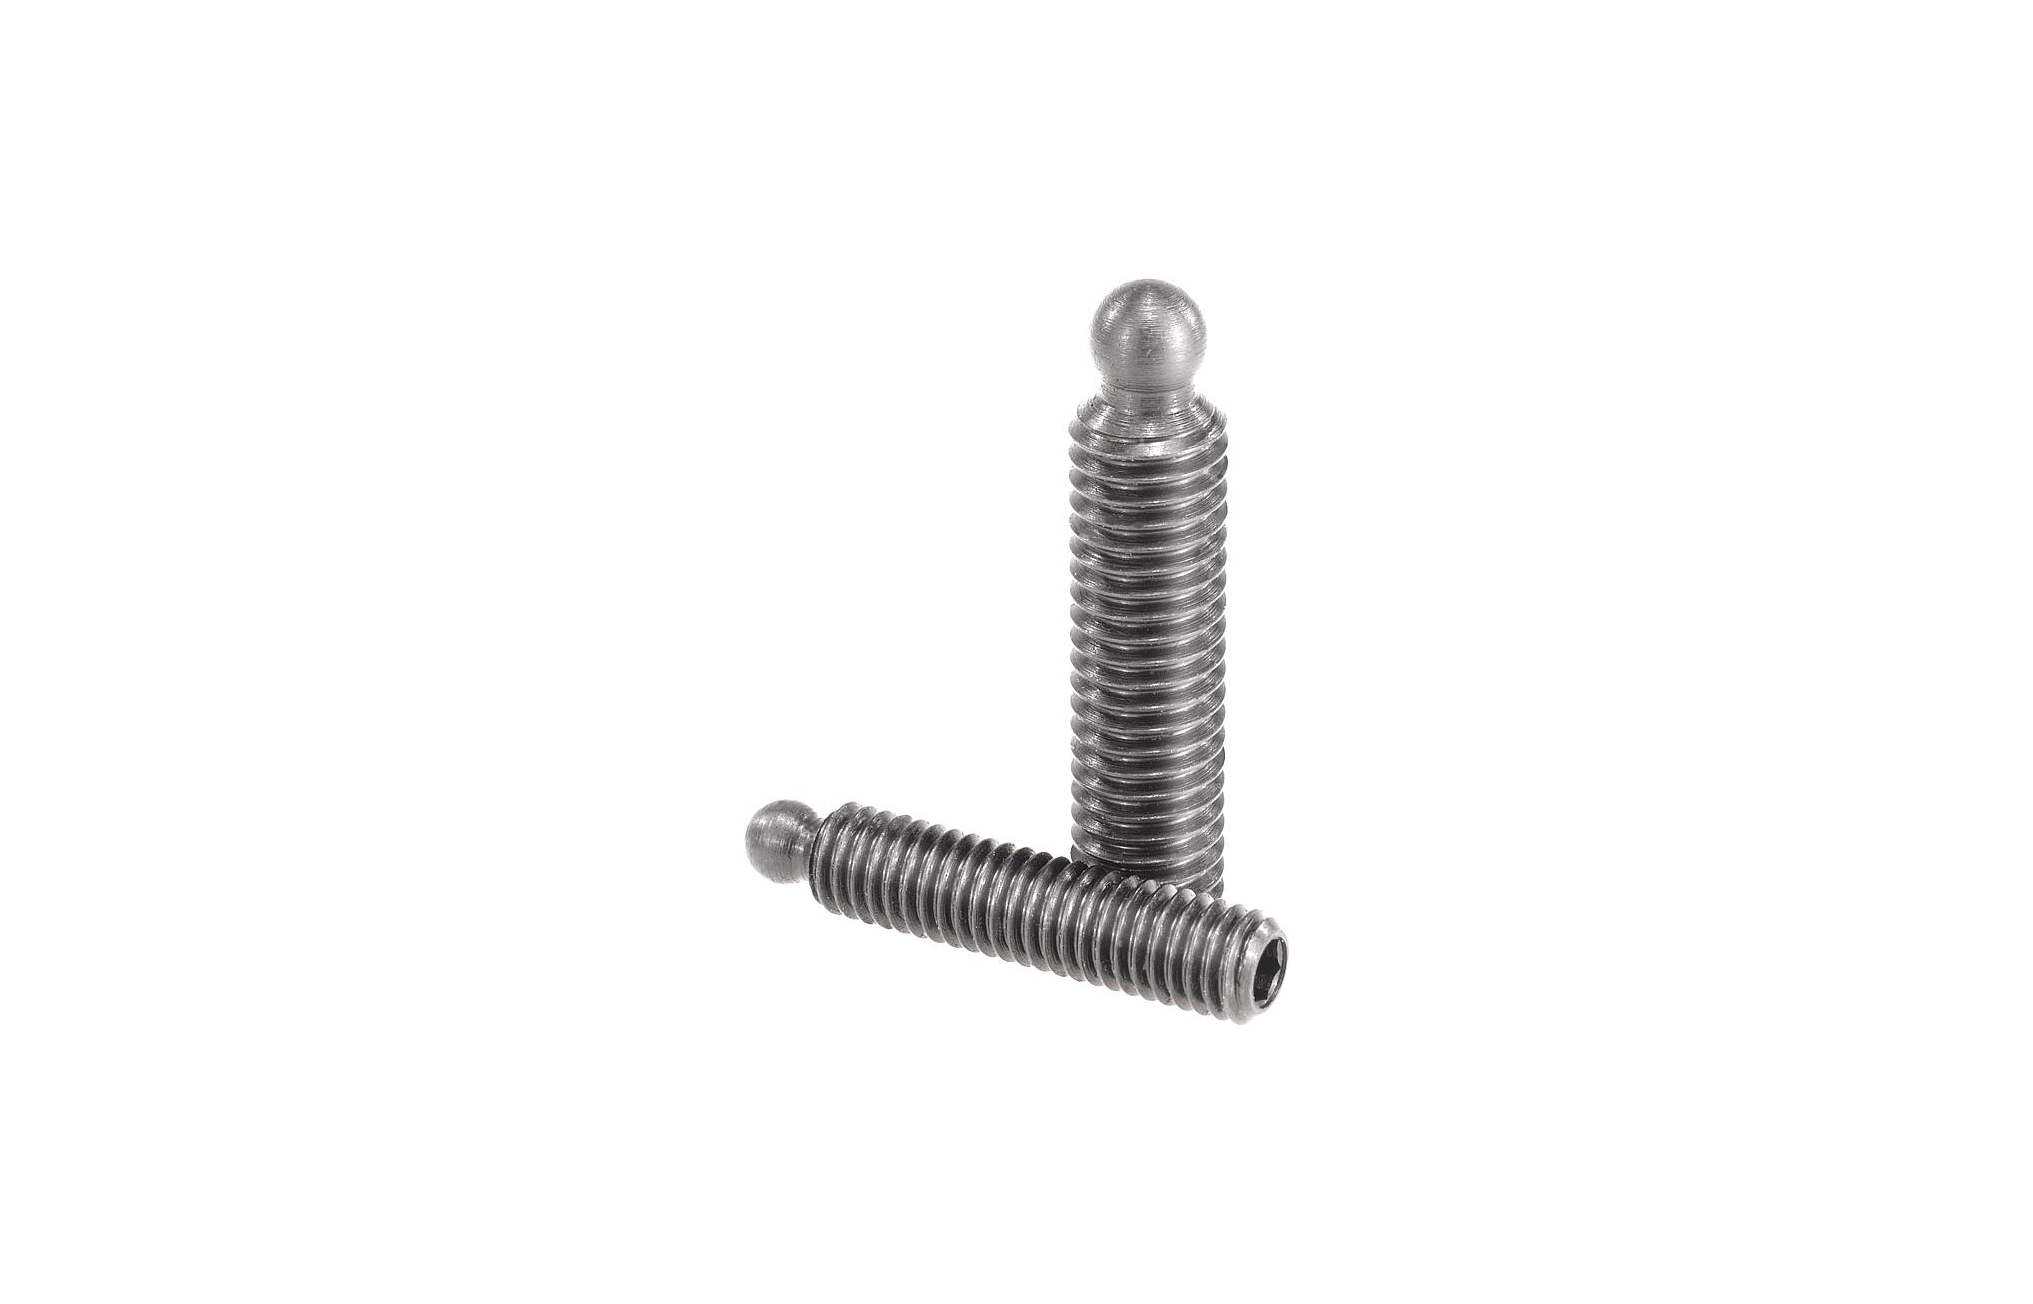 K0391 Grub screws with ball thrust point